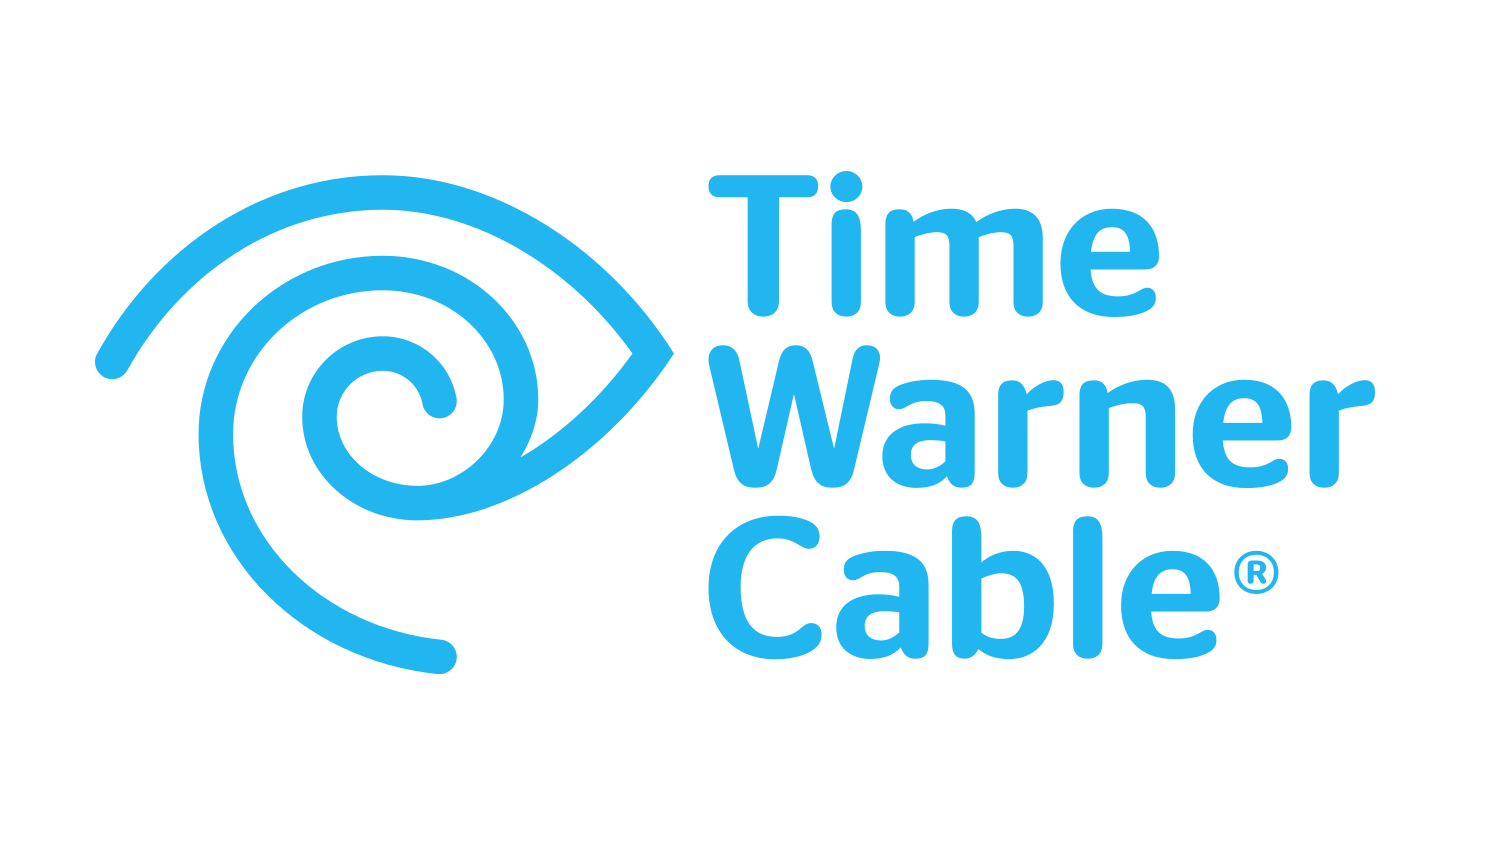 Cable Company Logo - Time Warner Cable logo | Dwglogo